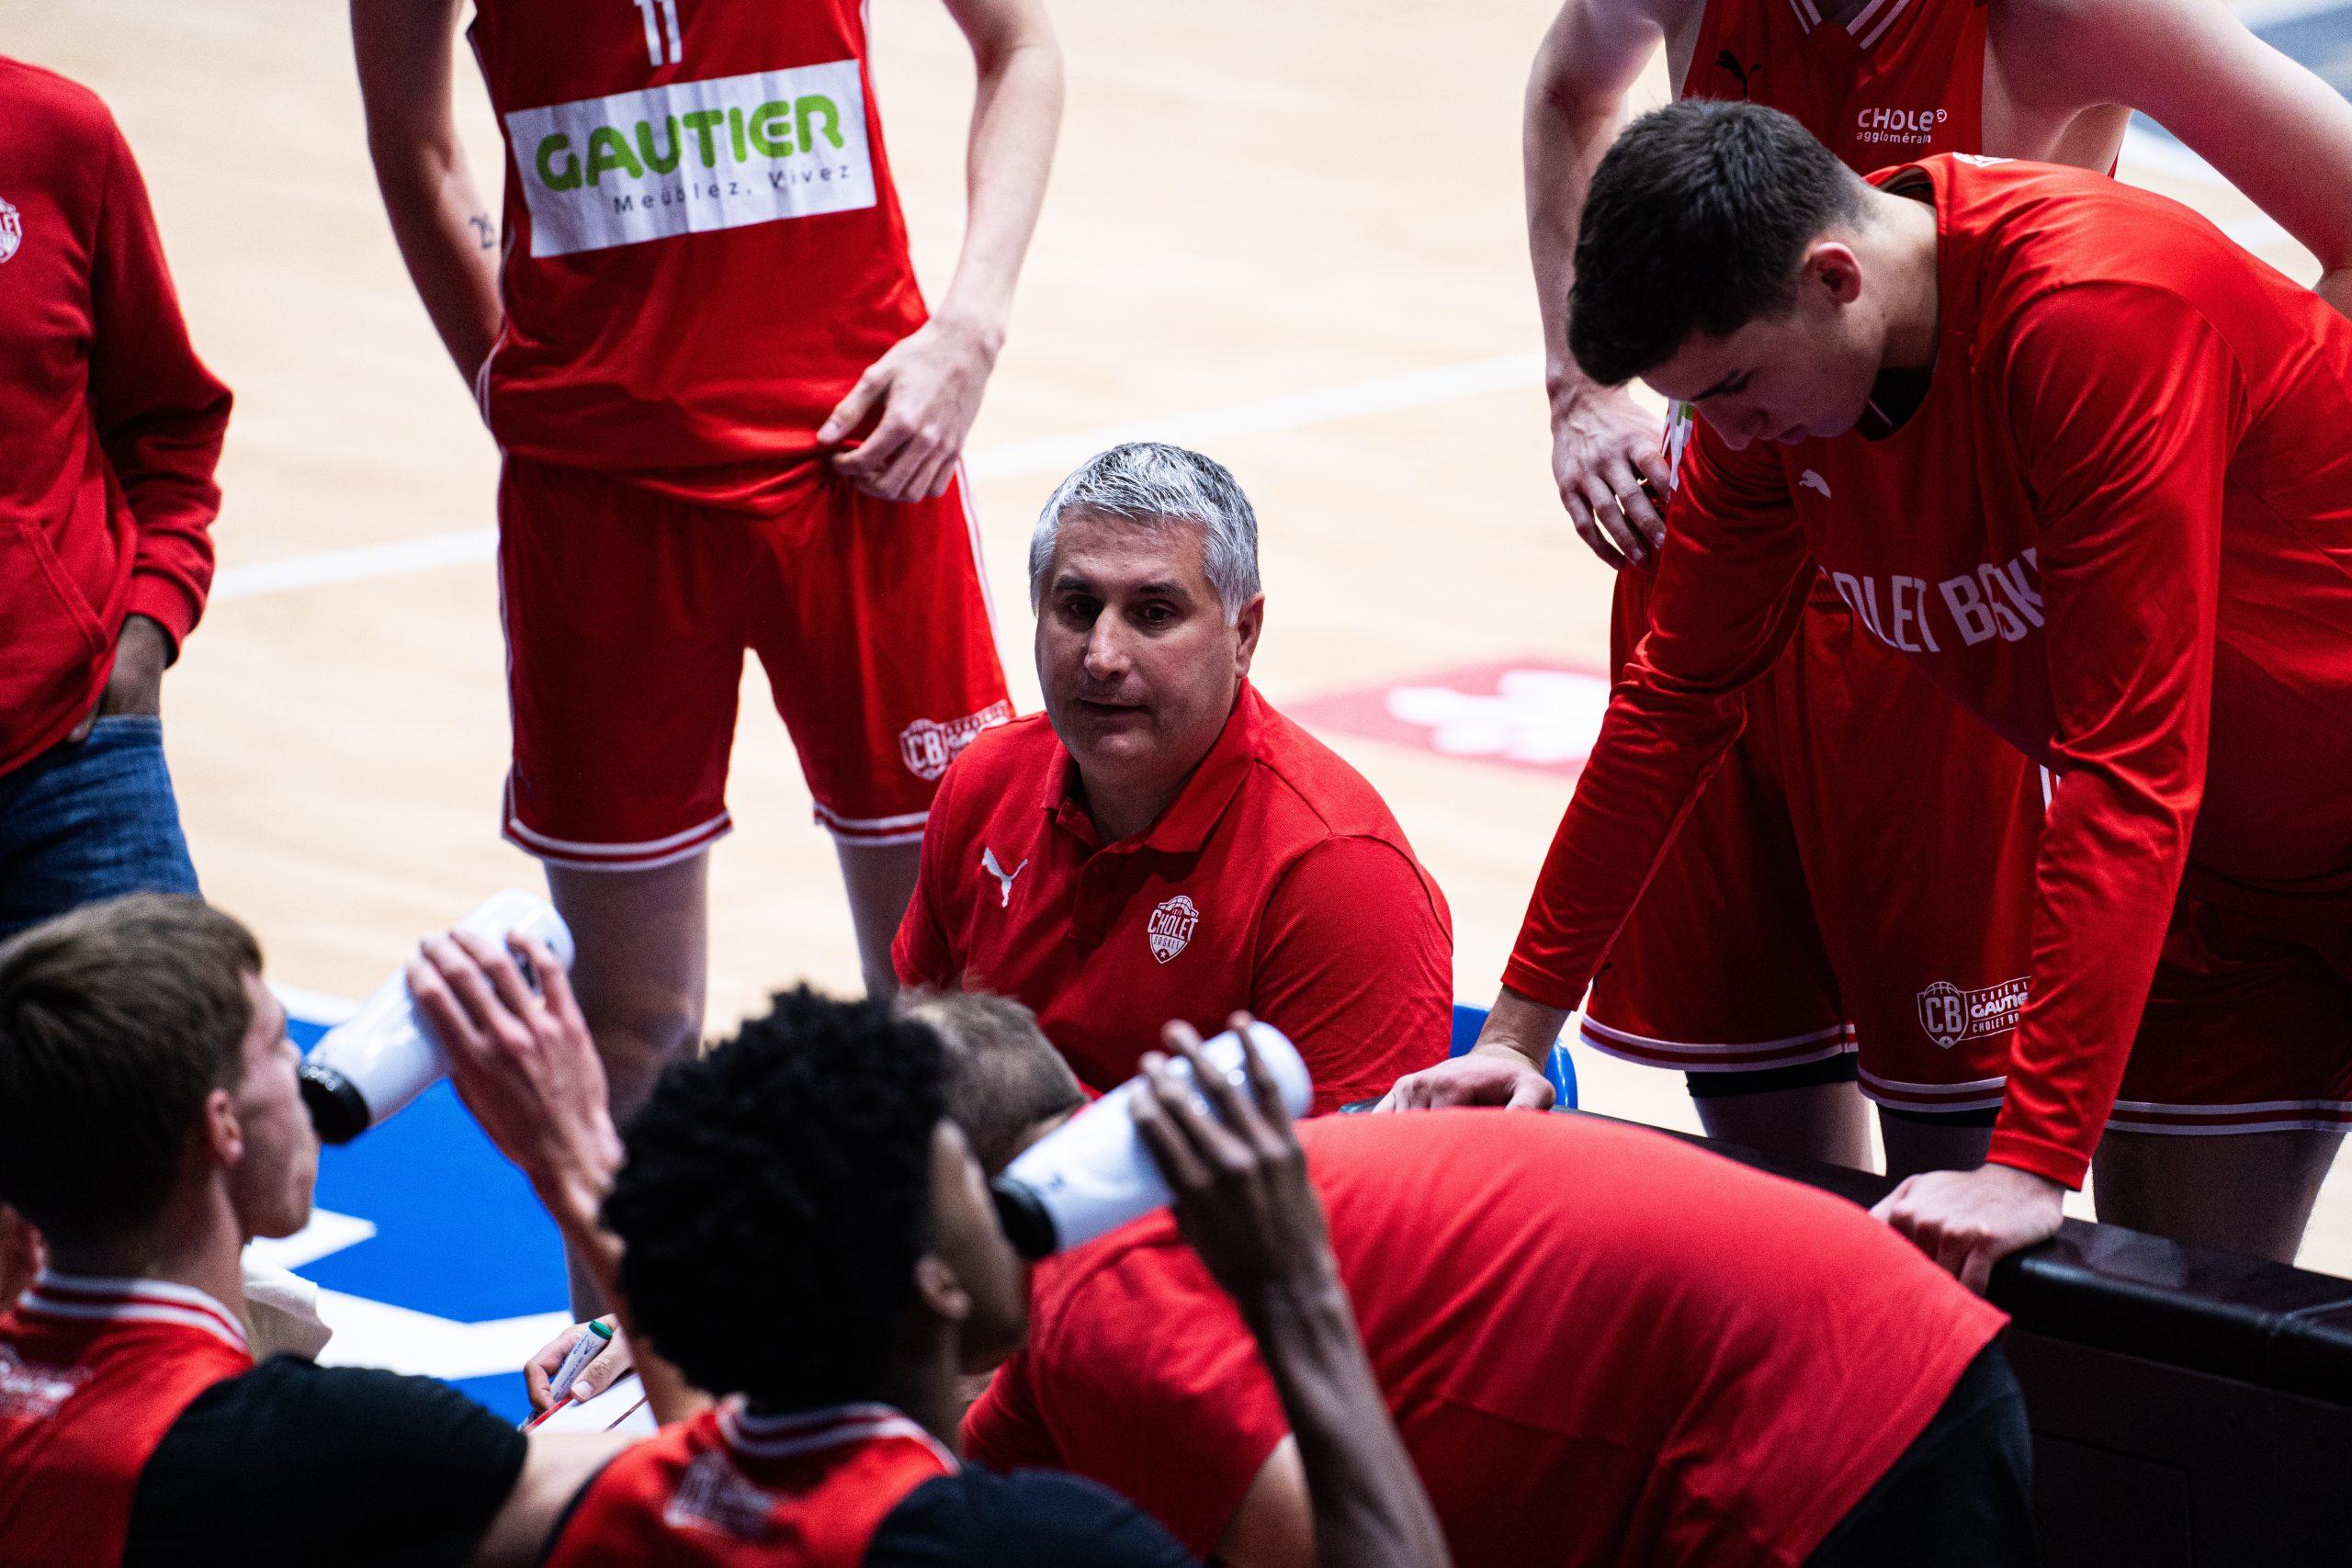 Après Robin Pluvy, Cholet Basket devrait attirer Mohamed Sankhé